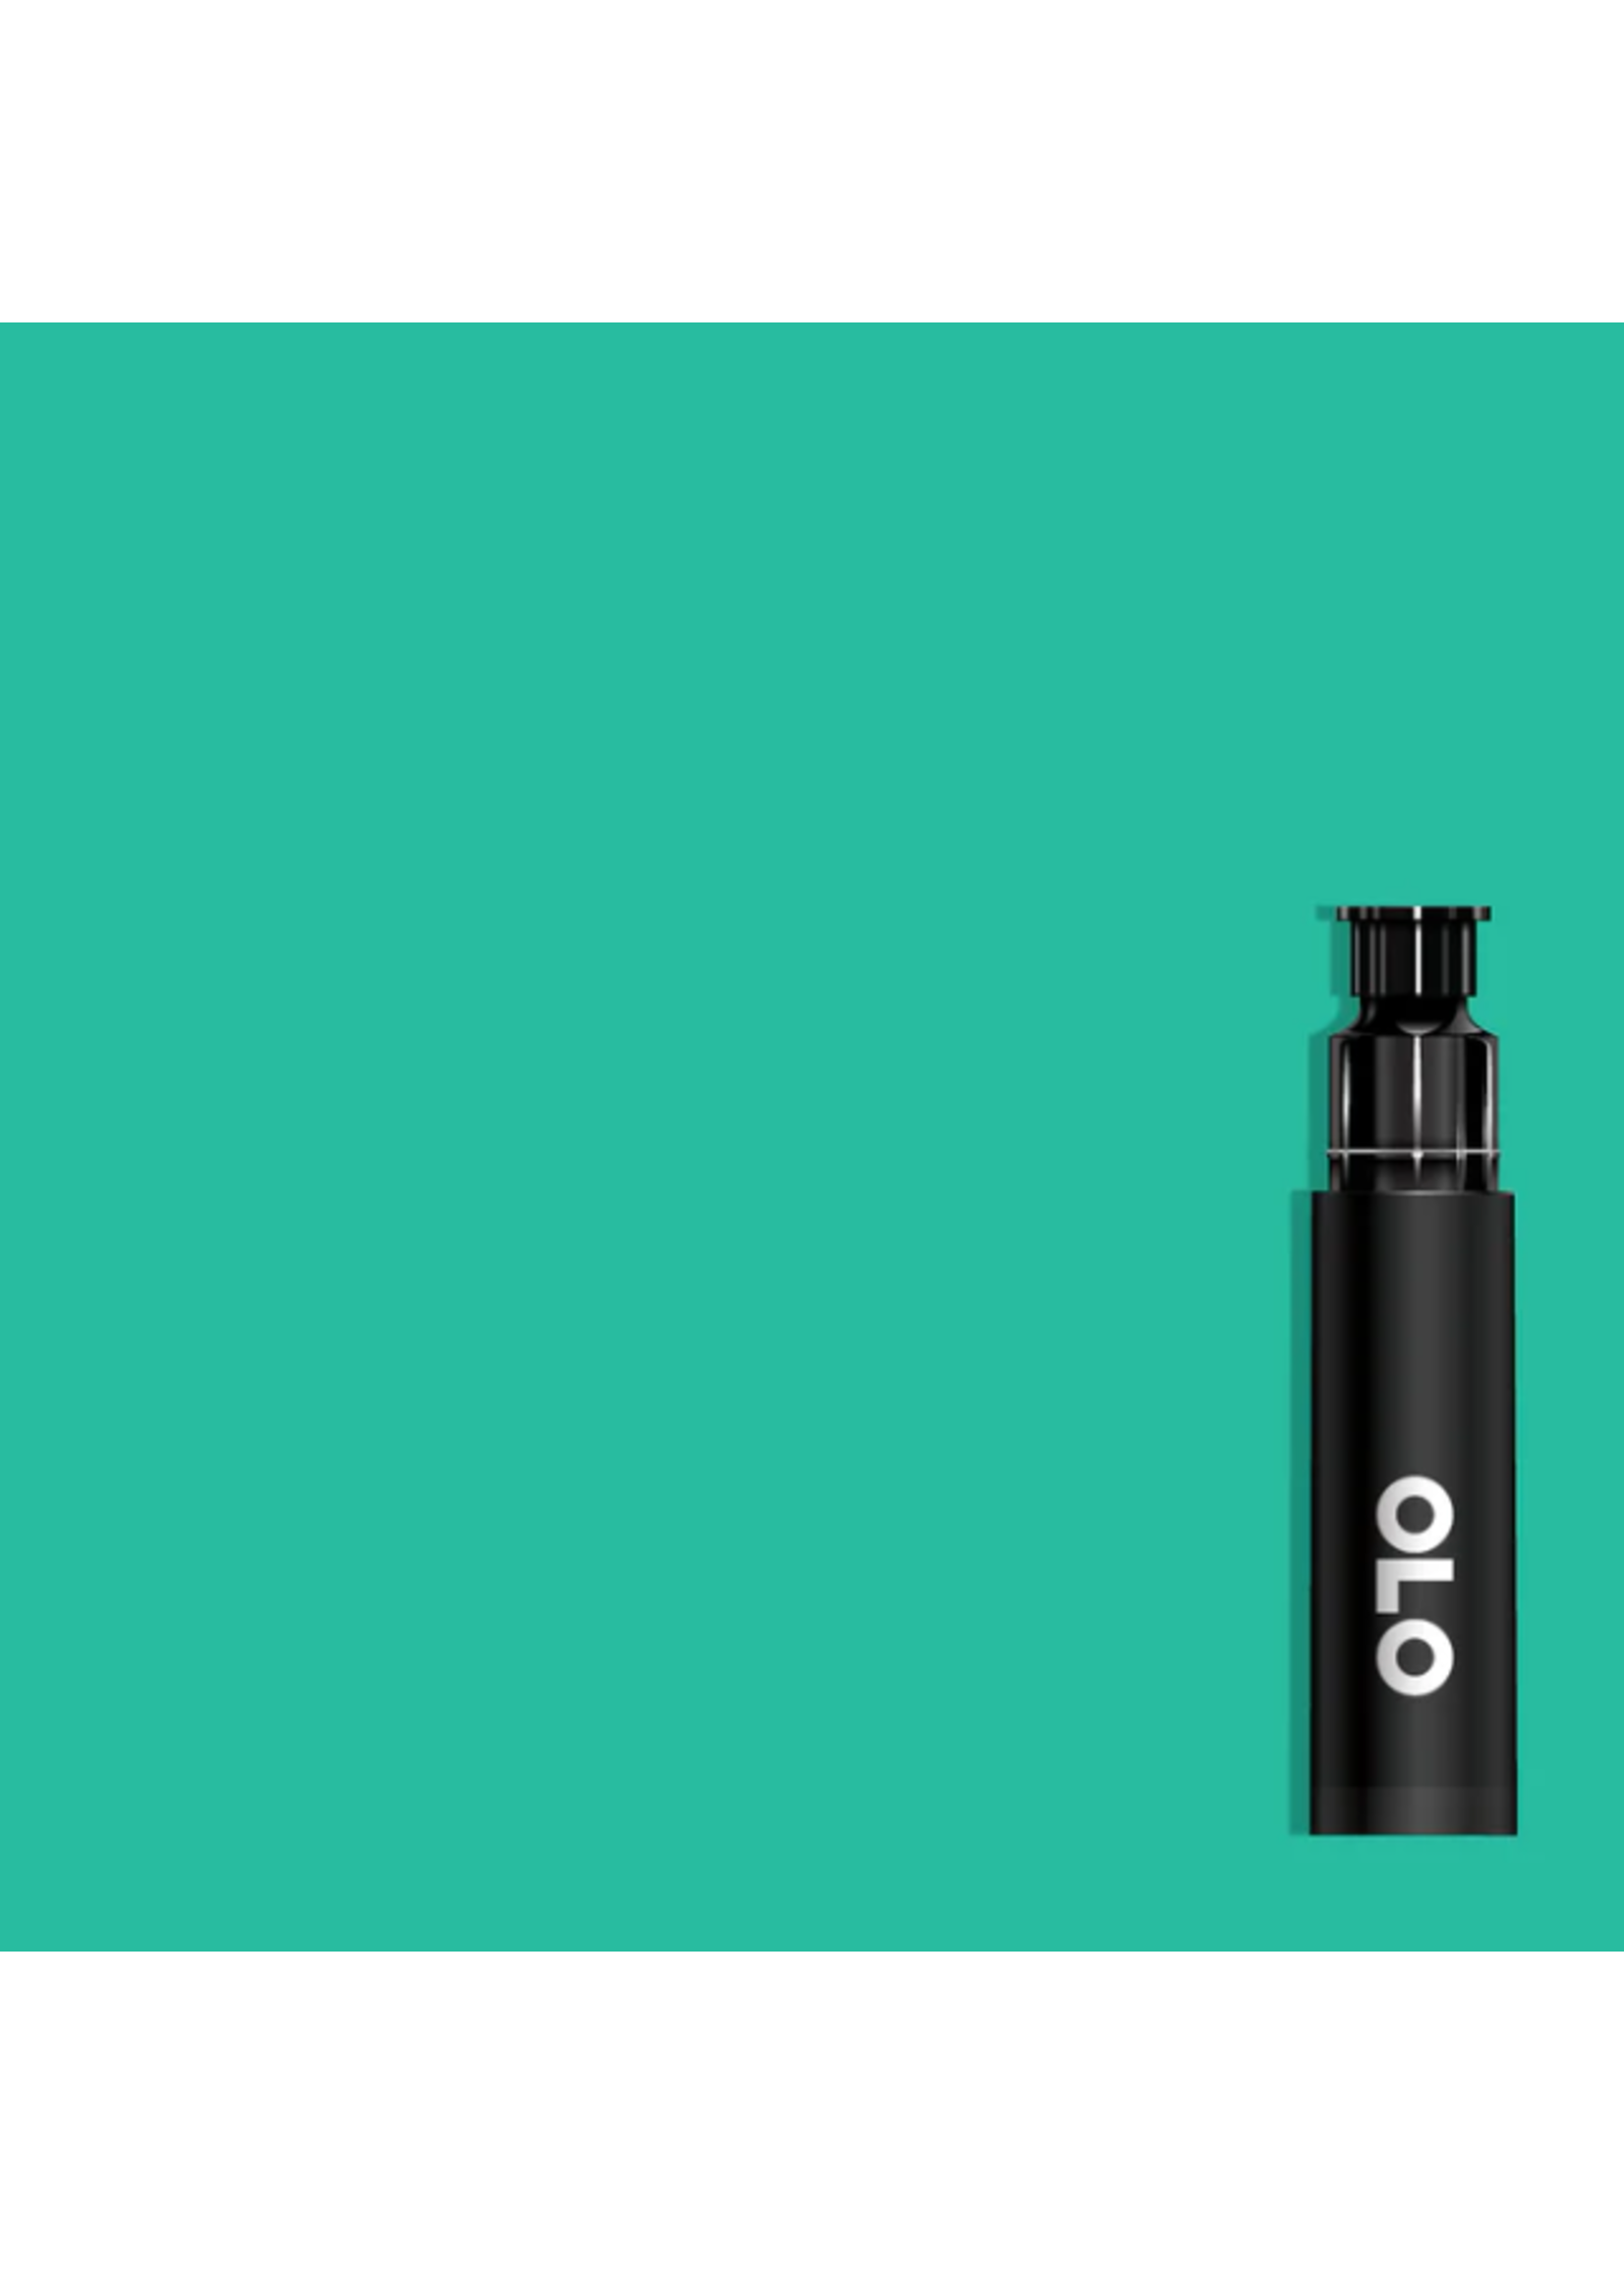 OLO OLO Brush Replacement Cartridge: Aqua Green